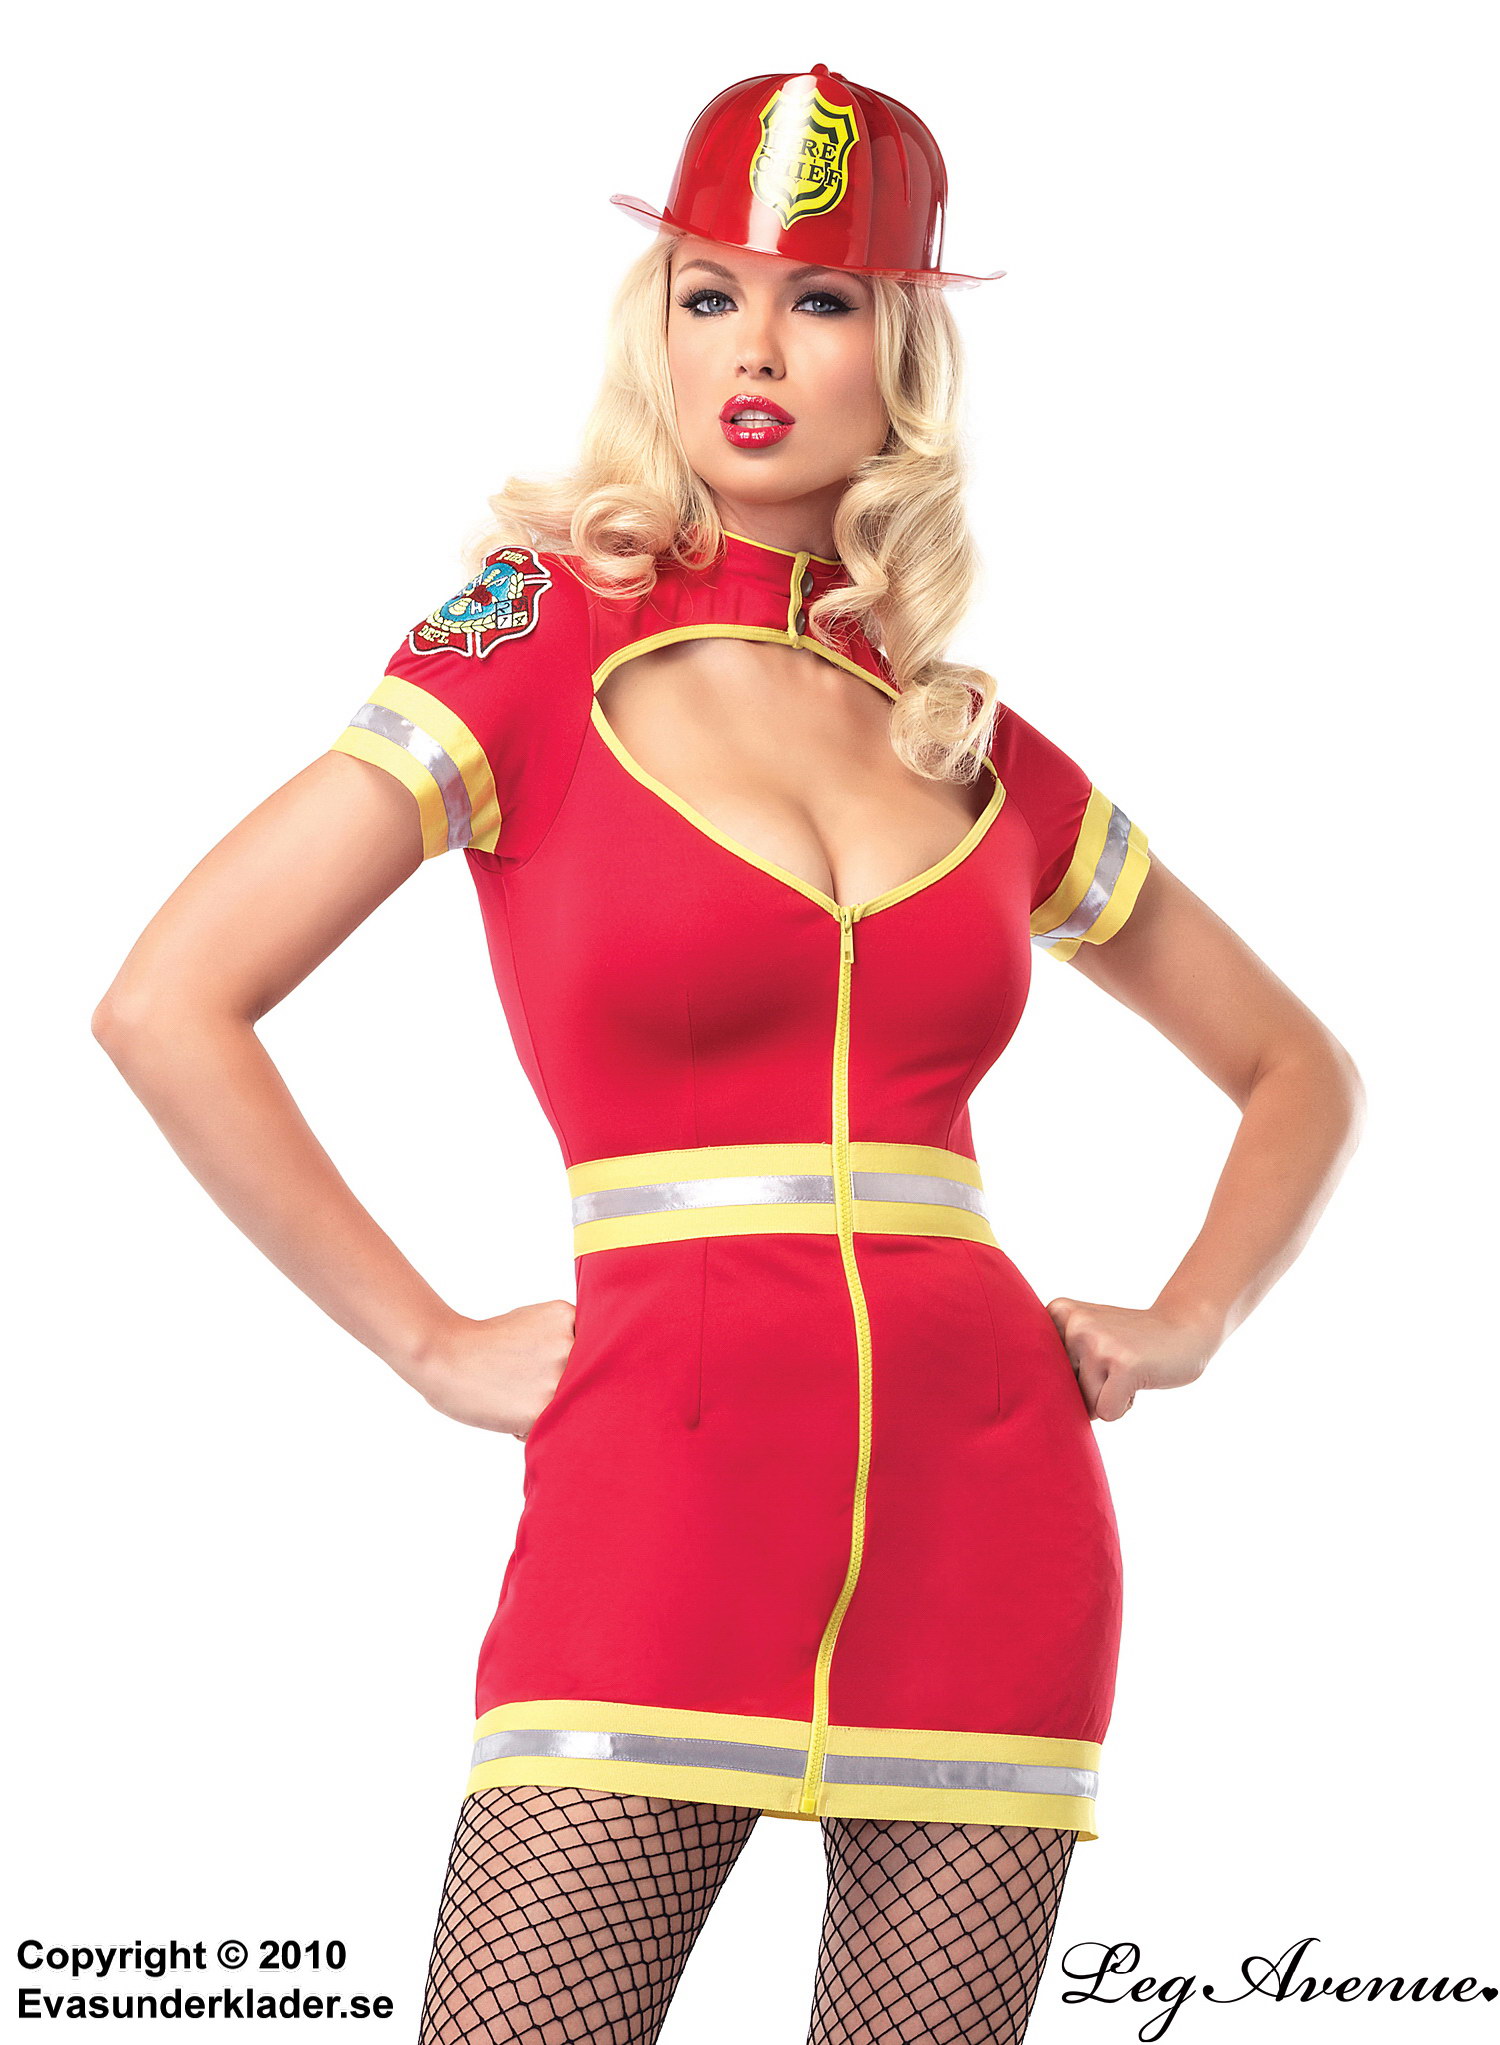 Firefighter, costume